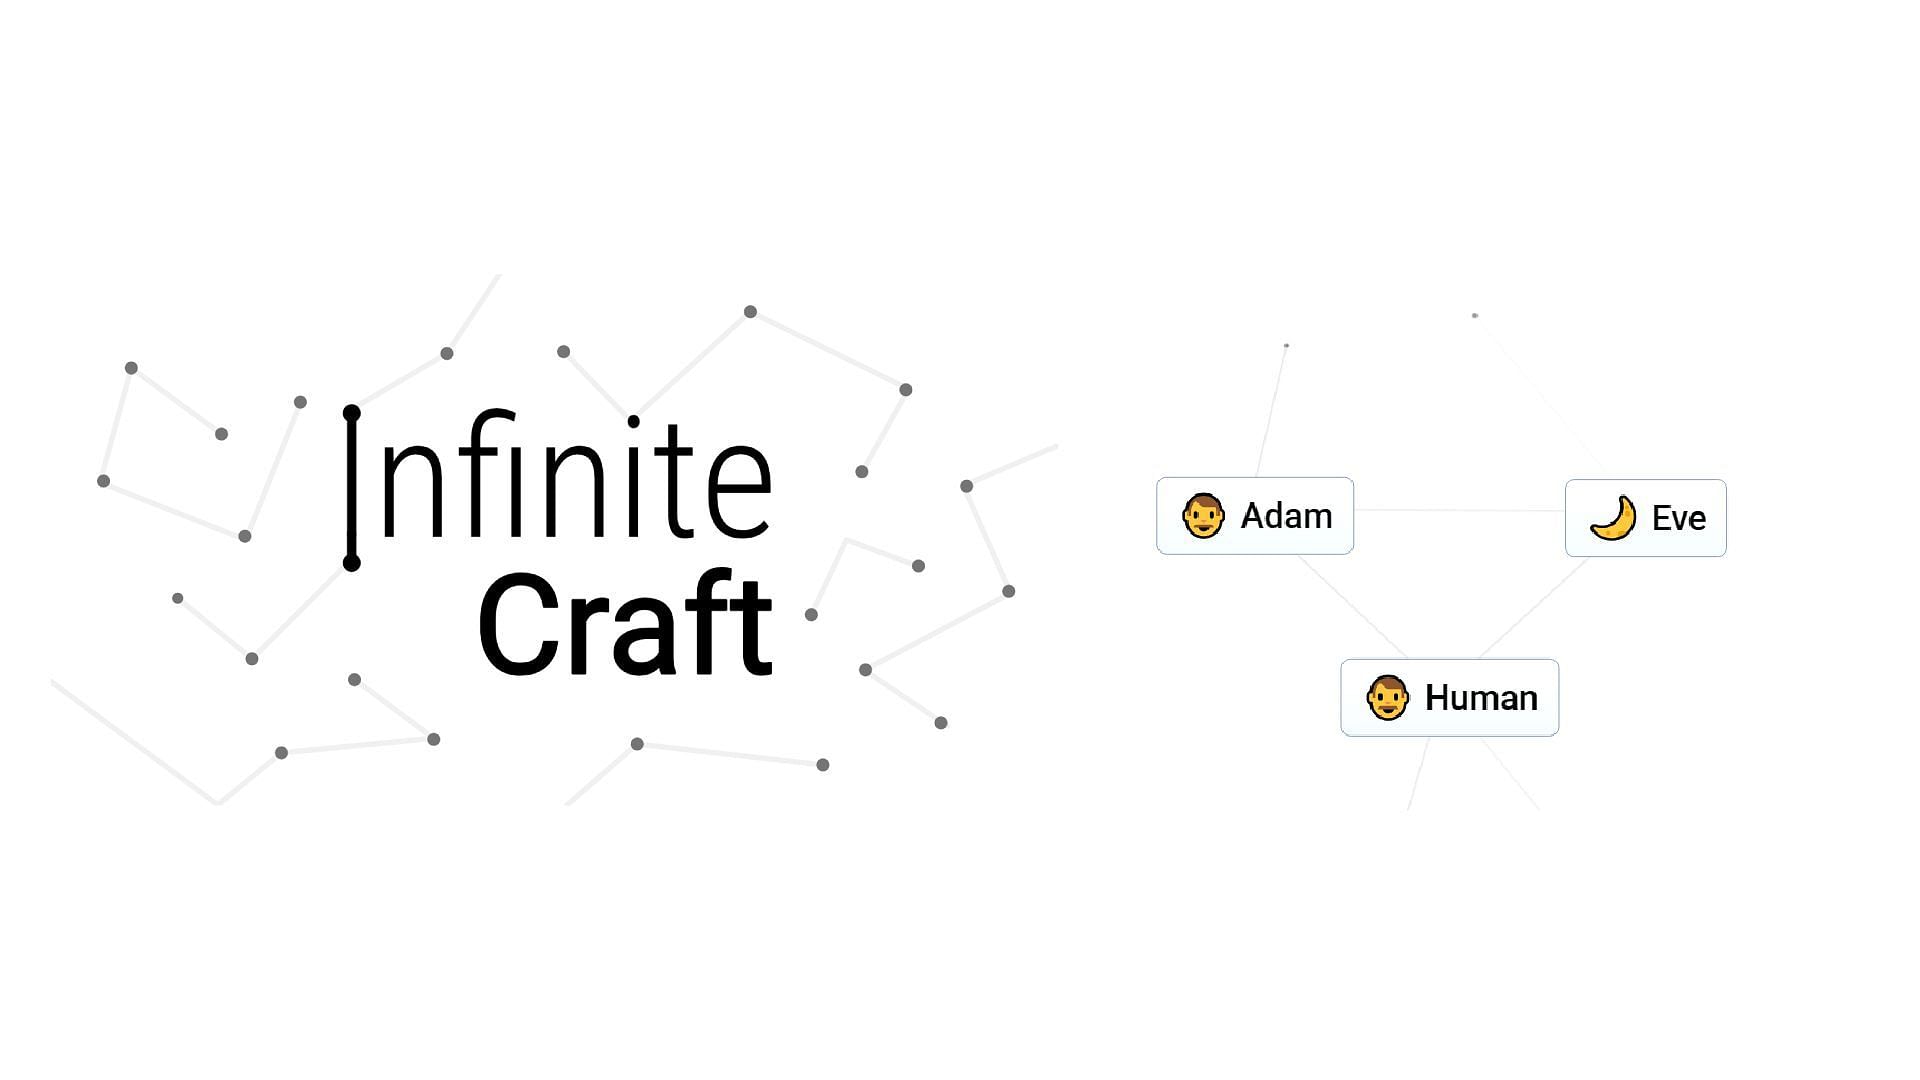 How to make Human in Infinite Craft (Image via neal.fun)